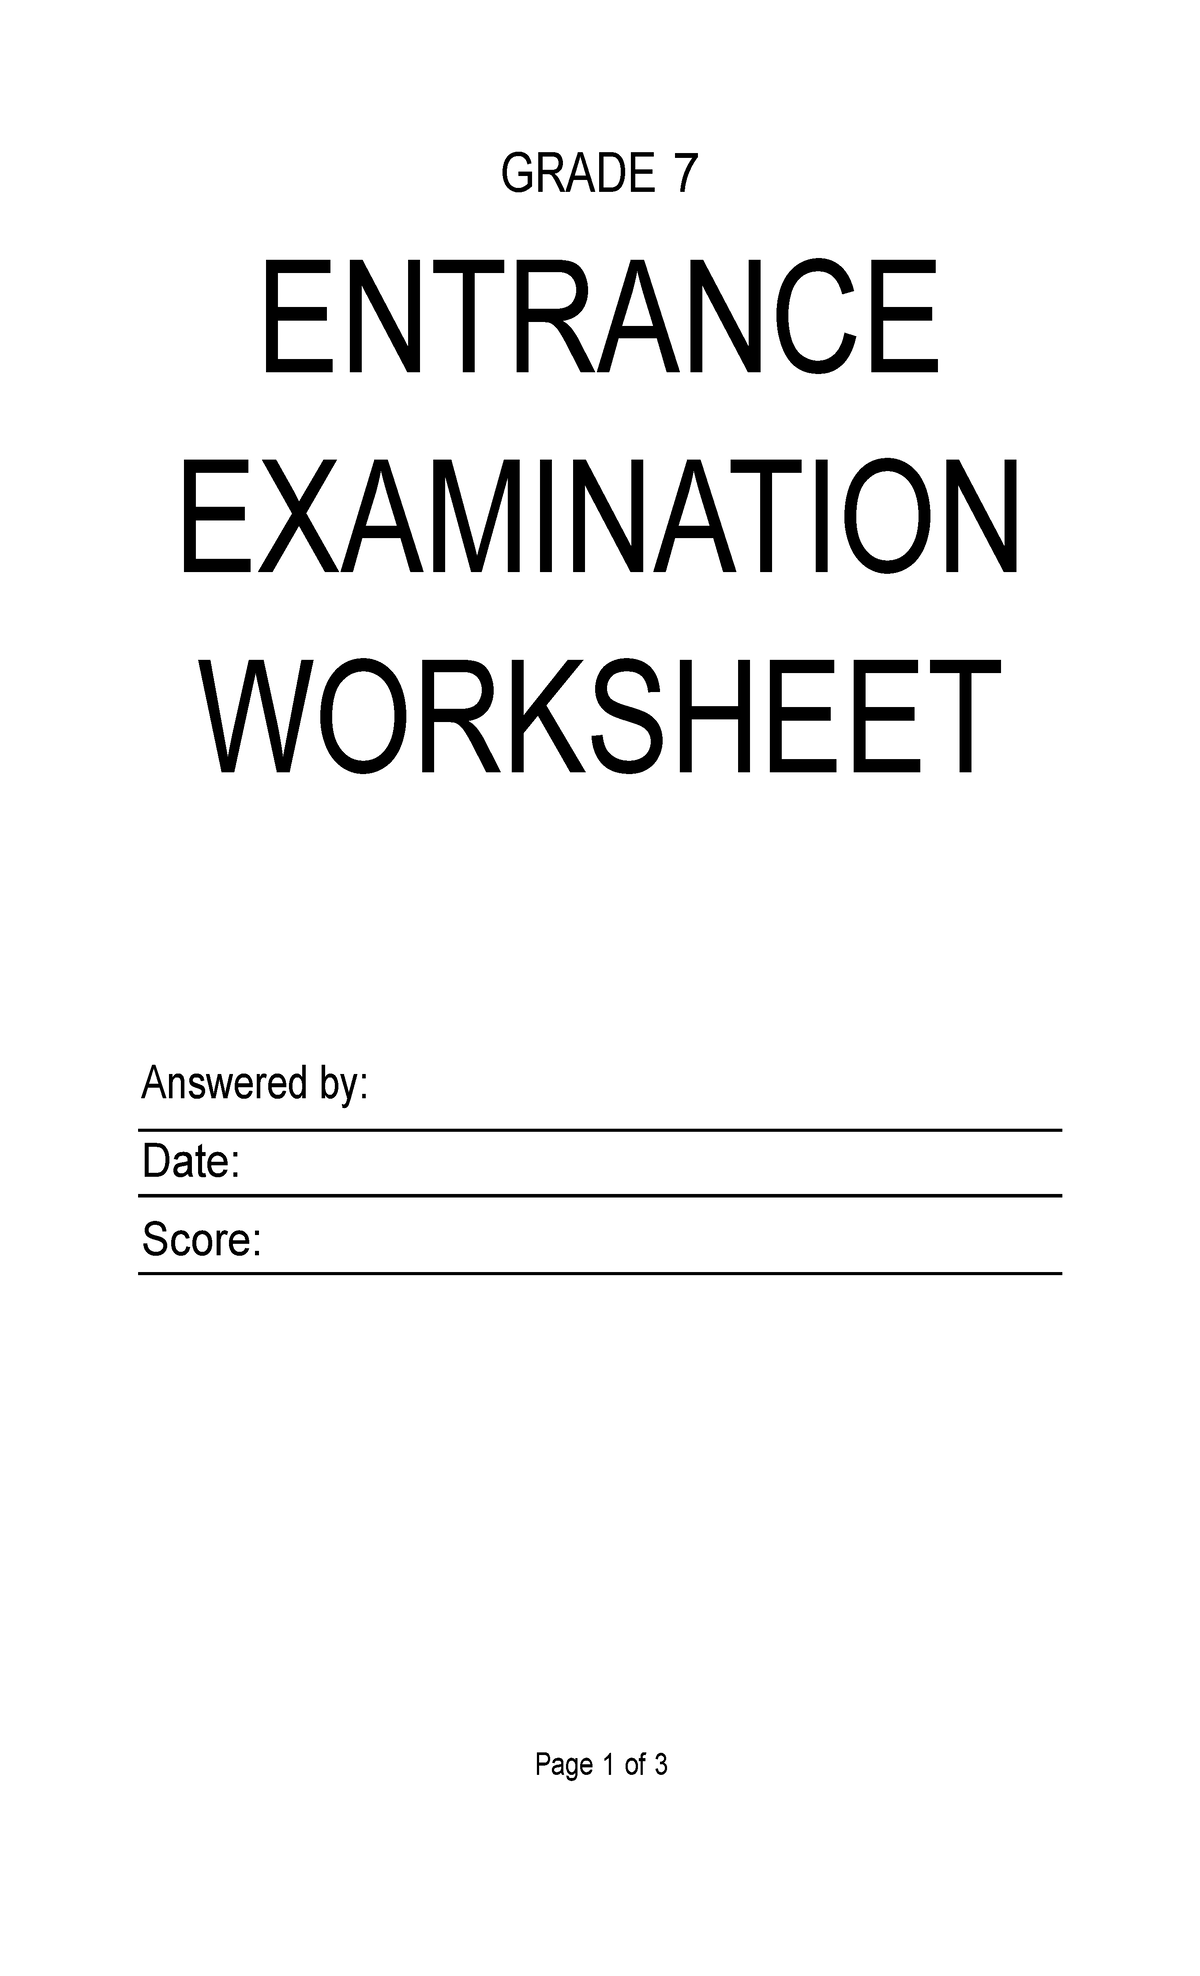 grade-7-mathematics-entrance-exam-page-1-of-3-grade-7-entrance-examination-worksheet-answered